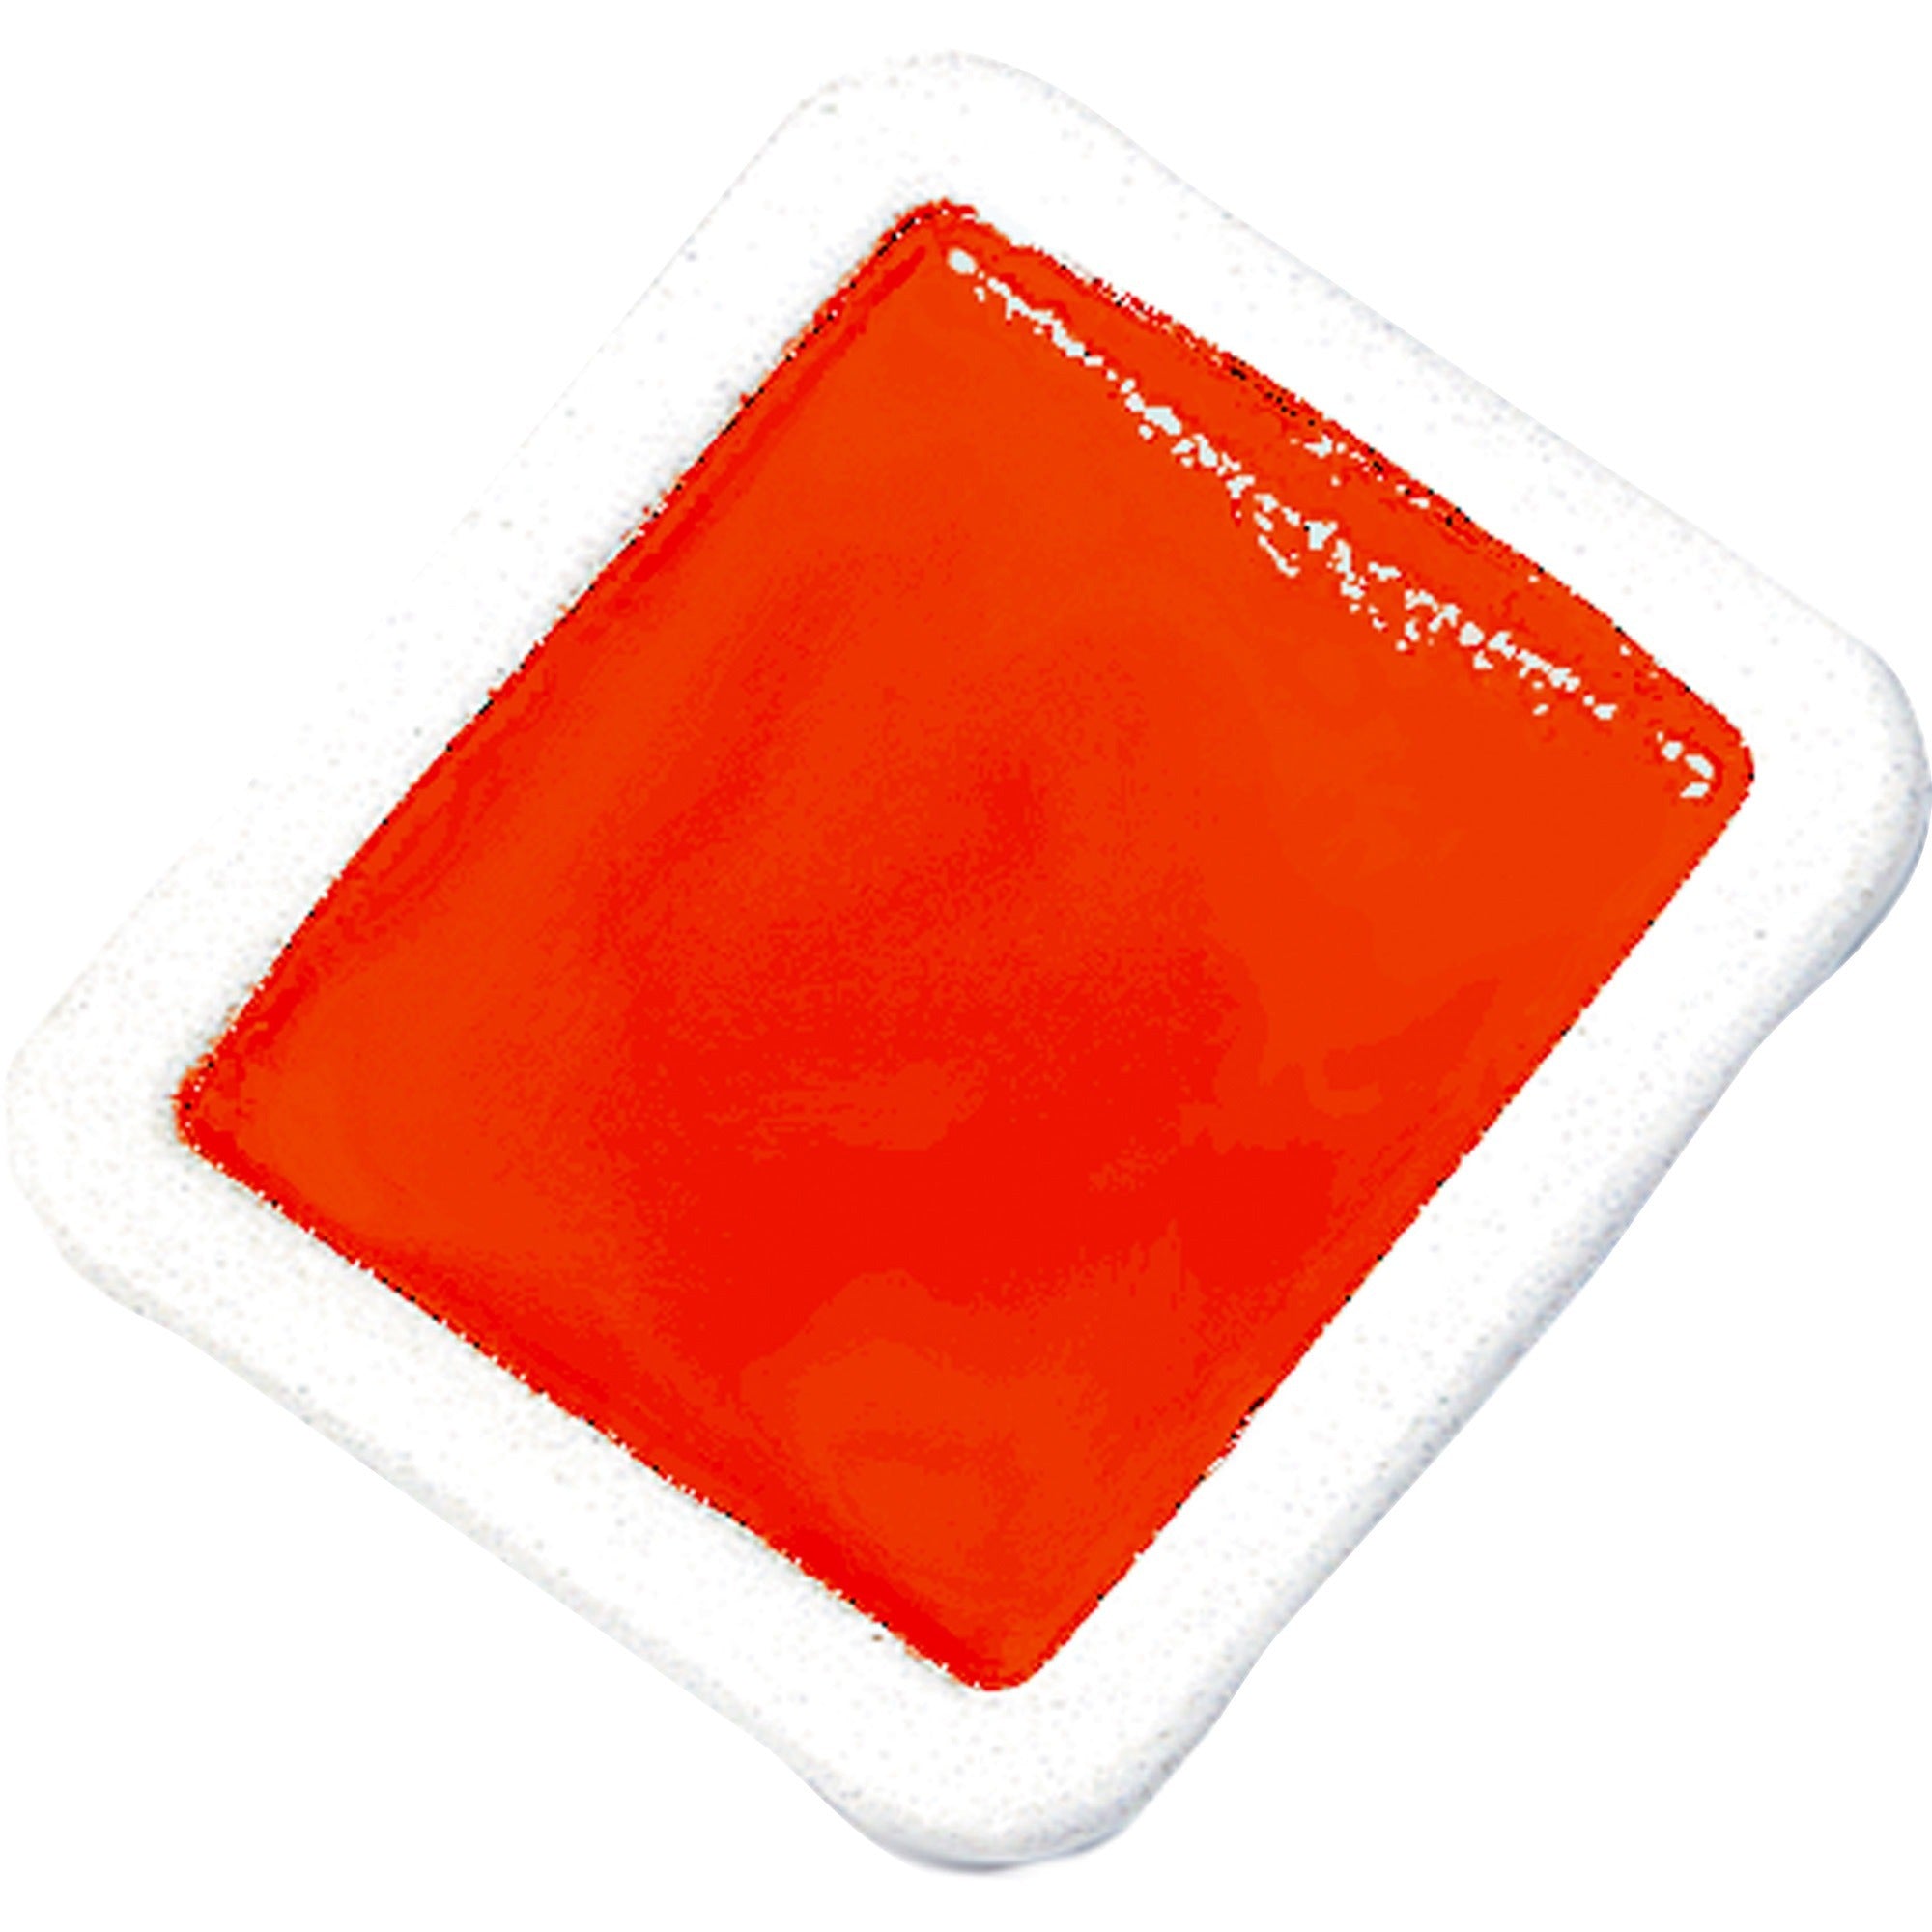 prang-half-pan-watercolors-refill-1-dozen-red-orange_dixx8010 - 1